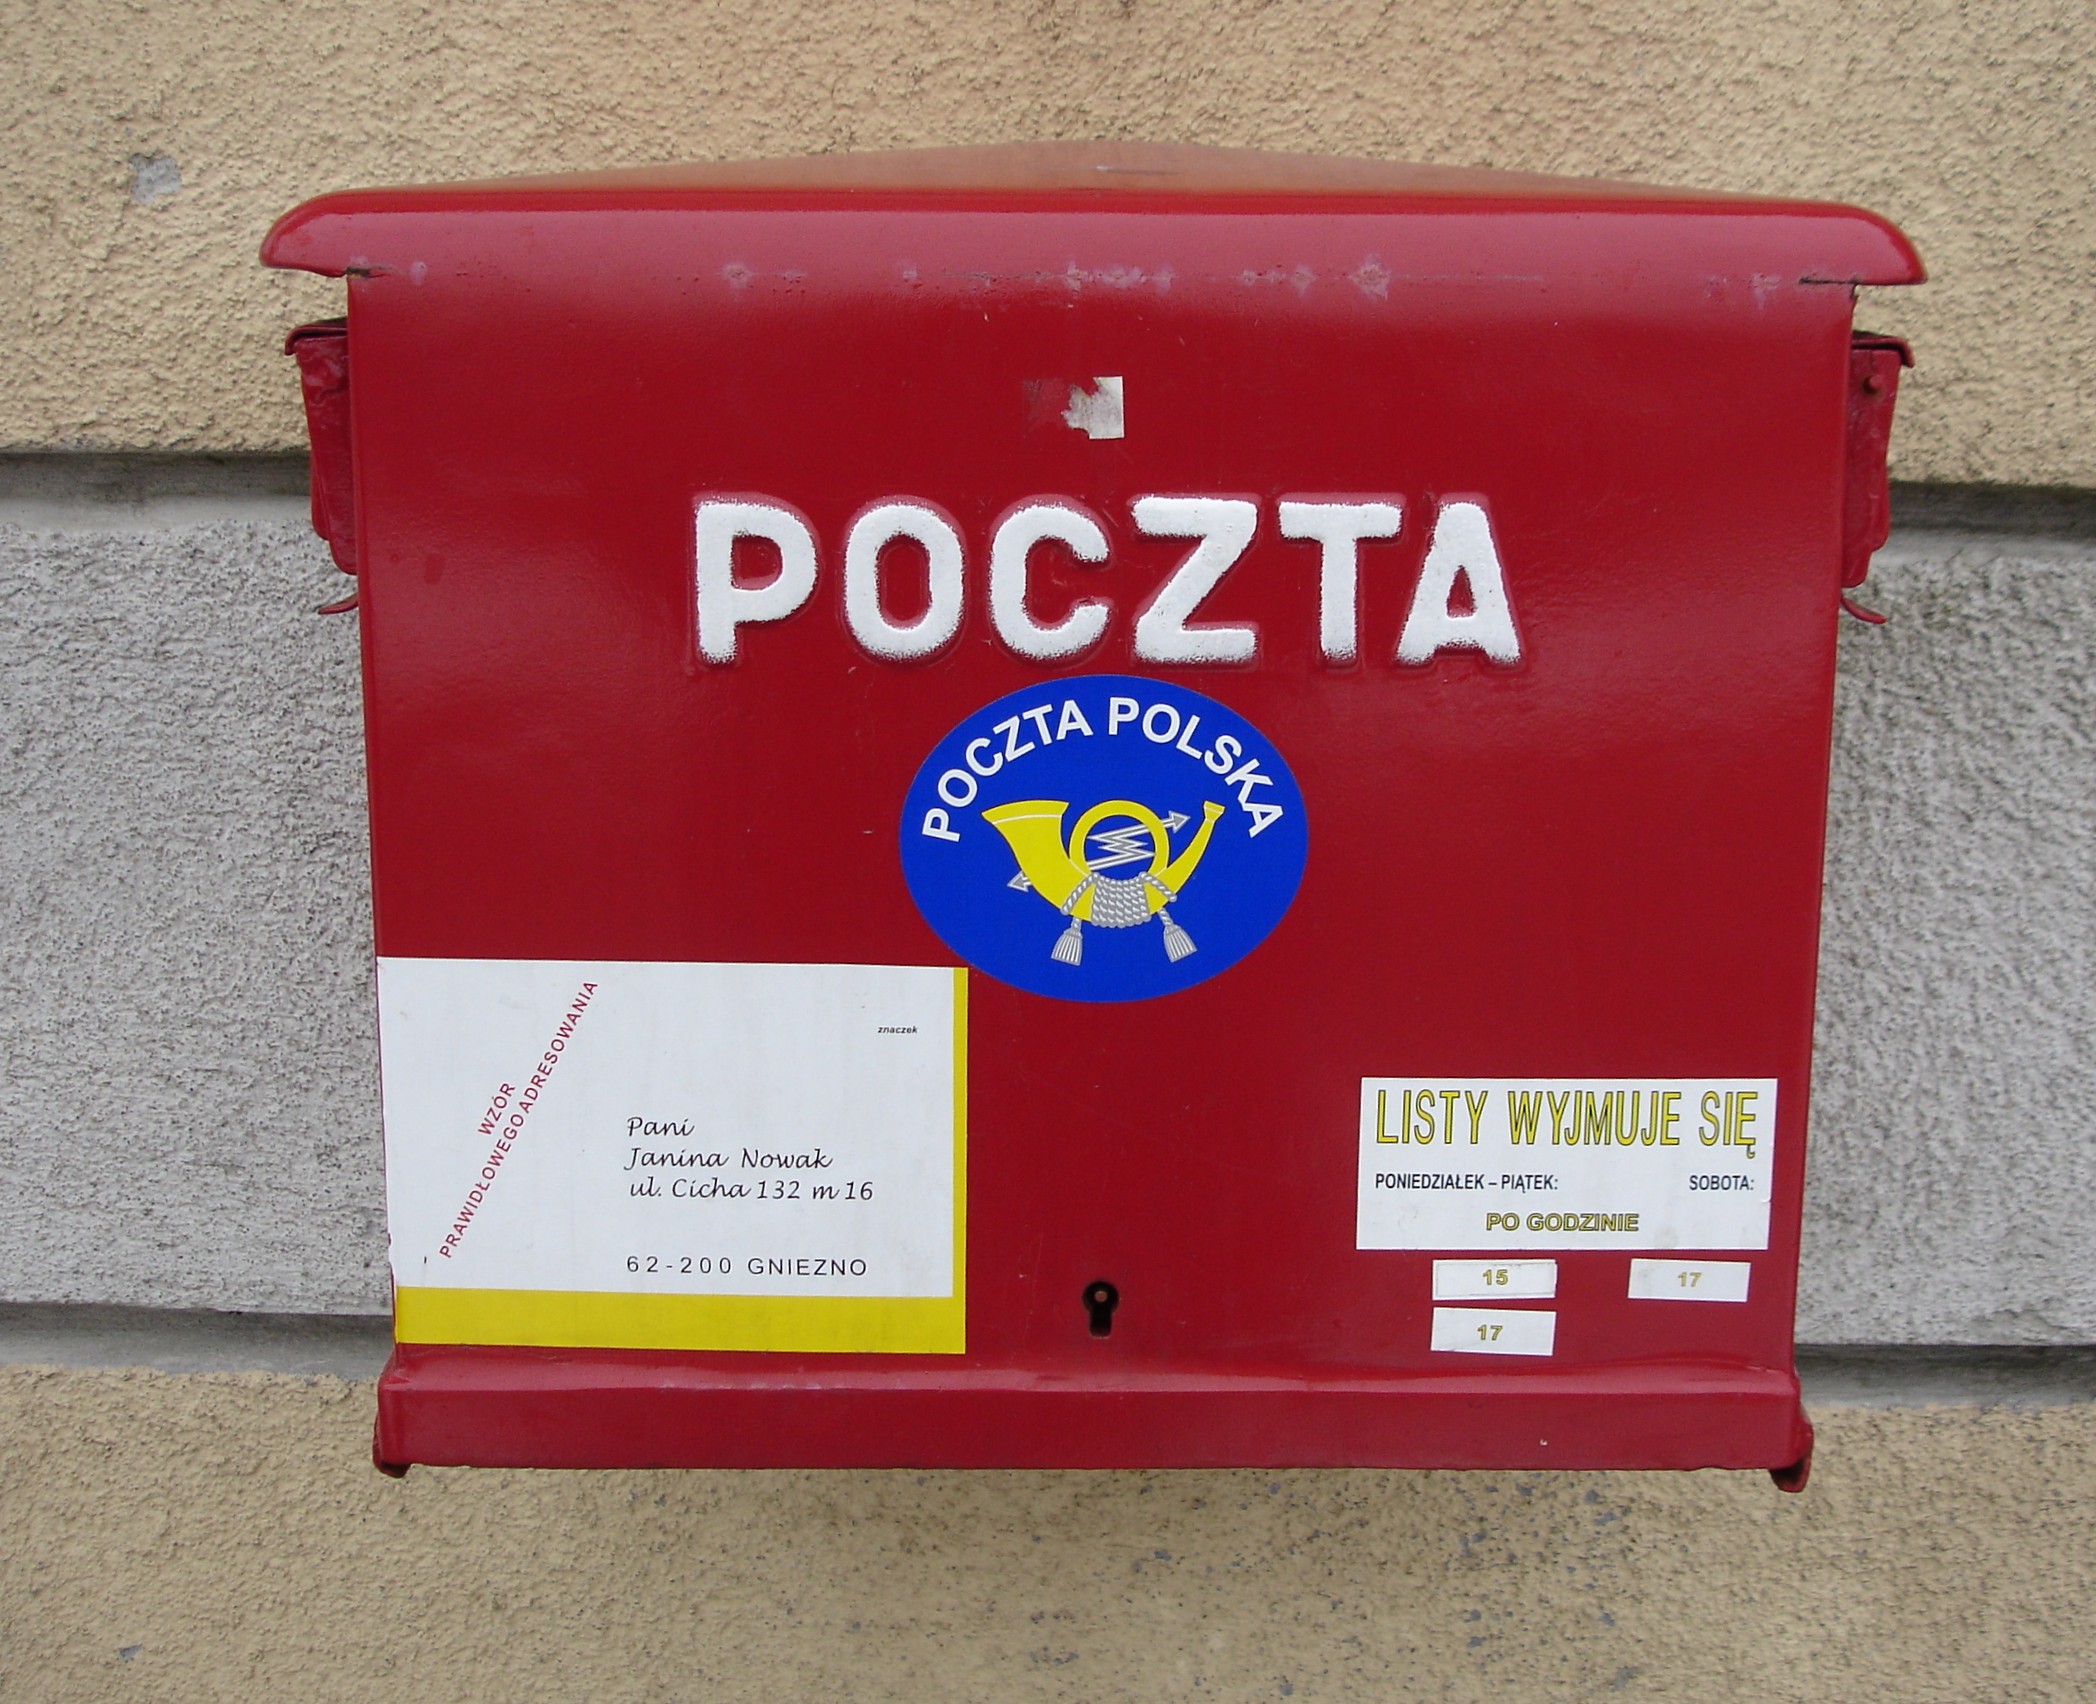 Postal code - Wikipedia